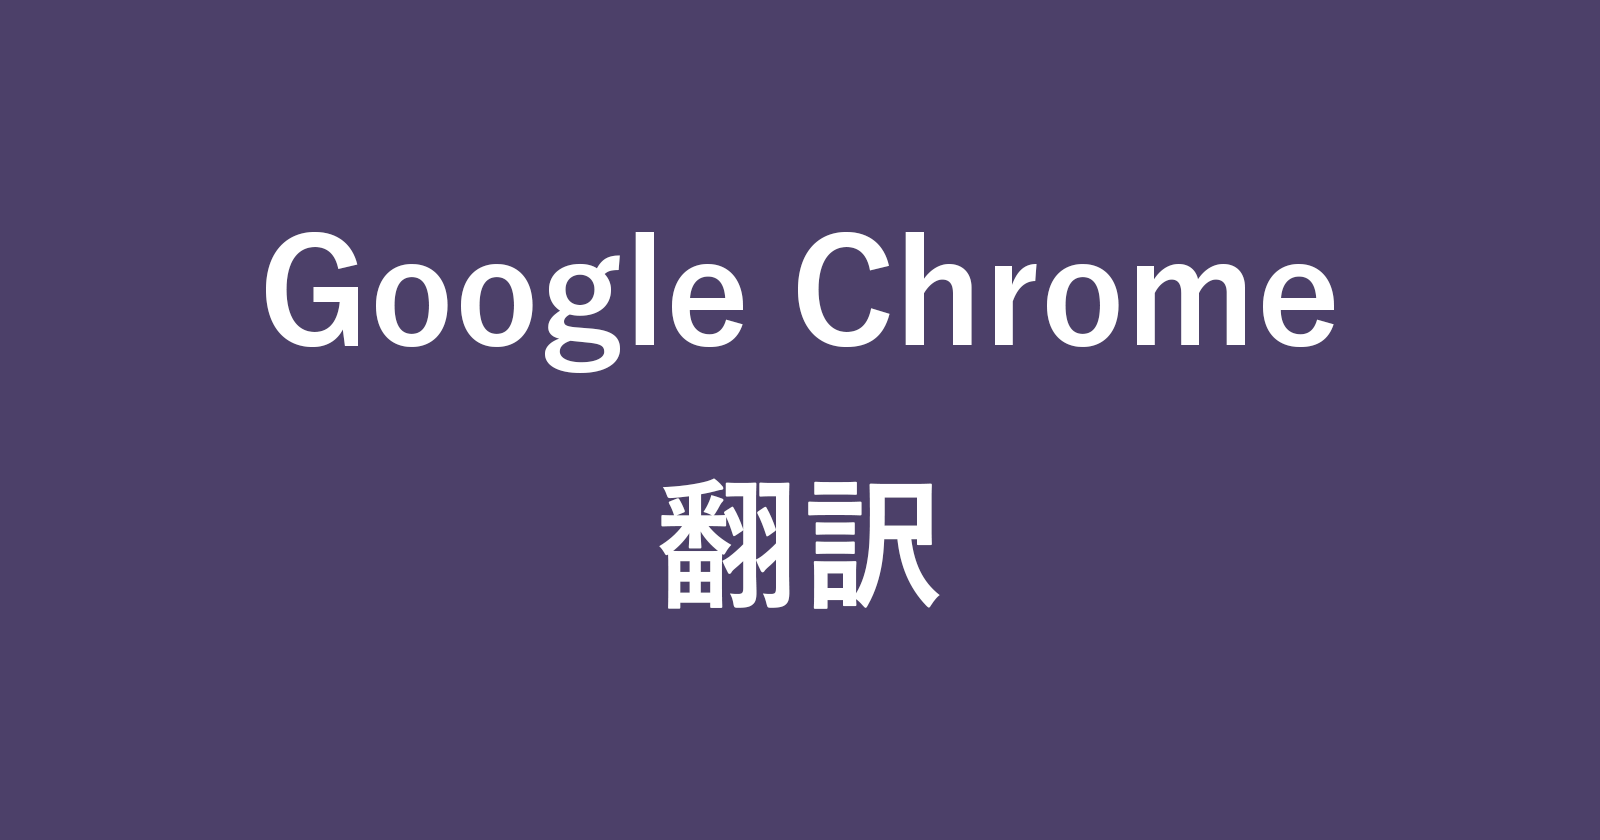 google chrome translattion